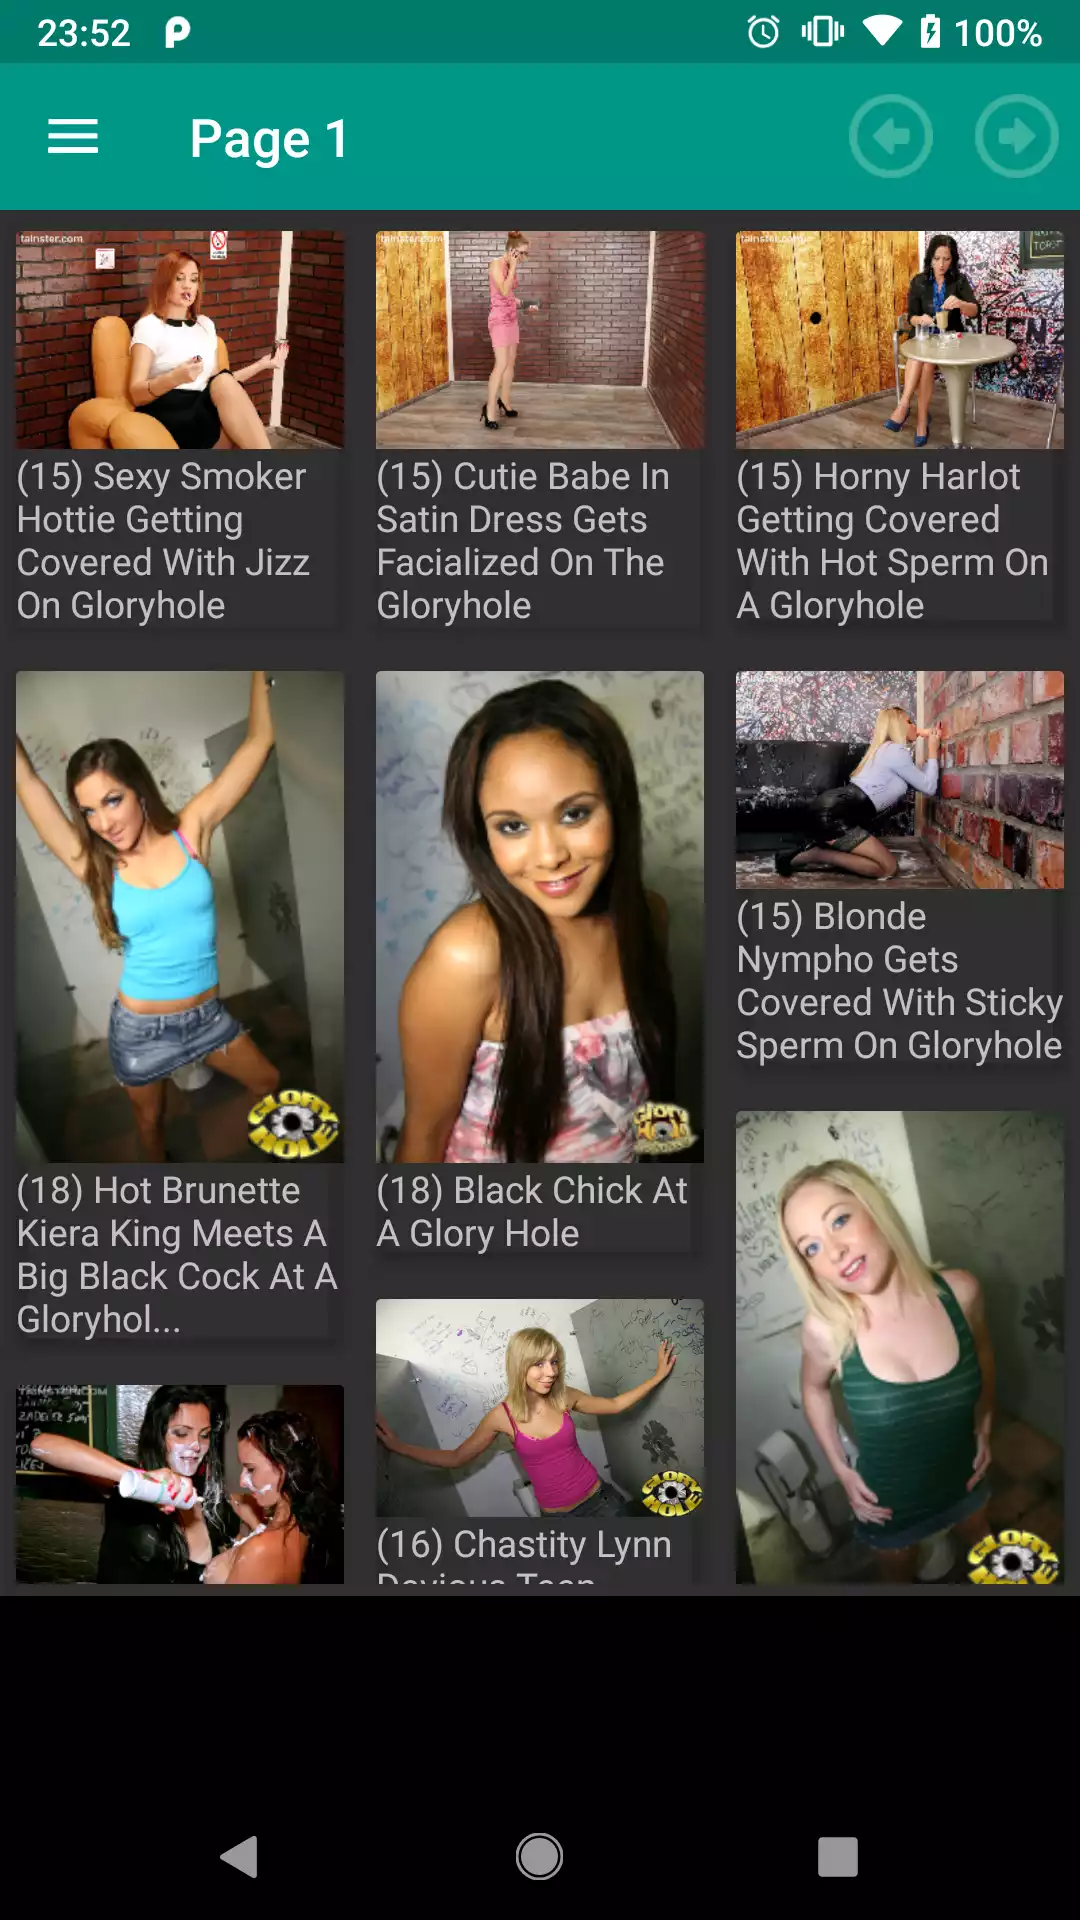 Gloryhole galleries dreams,hentai,pictures,pornstar,suck,download,shrinking,pornstars,pic,hot,collection,galleries,oictures,gloryhole,dick,best,apk,picture,free,amateur,henti,porn,app,pics